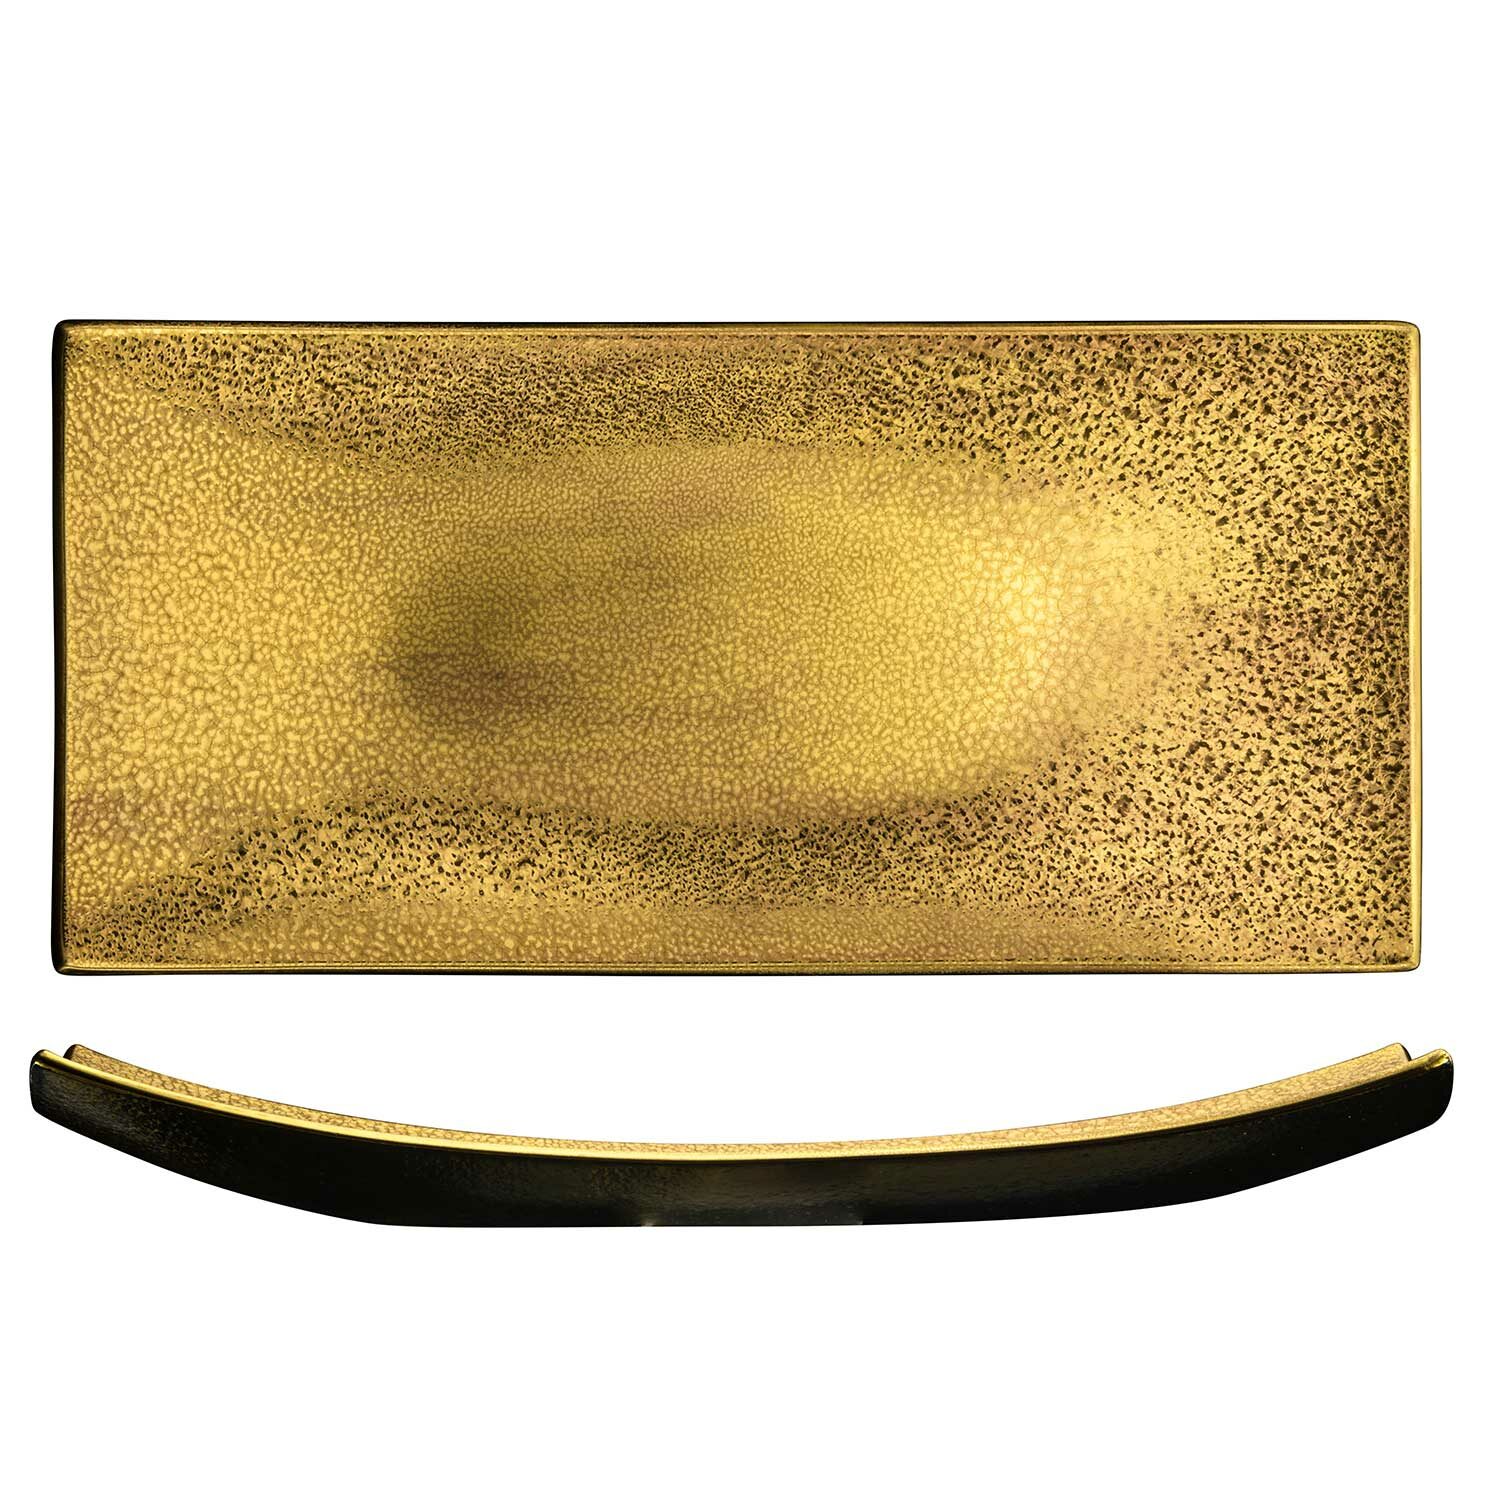 GOLD RUSH gold plate medium